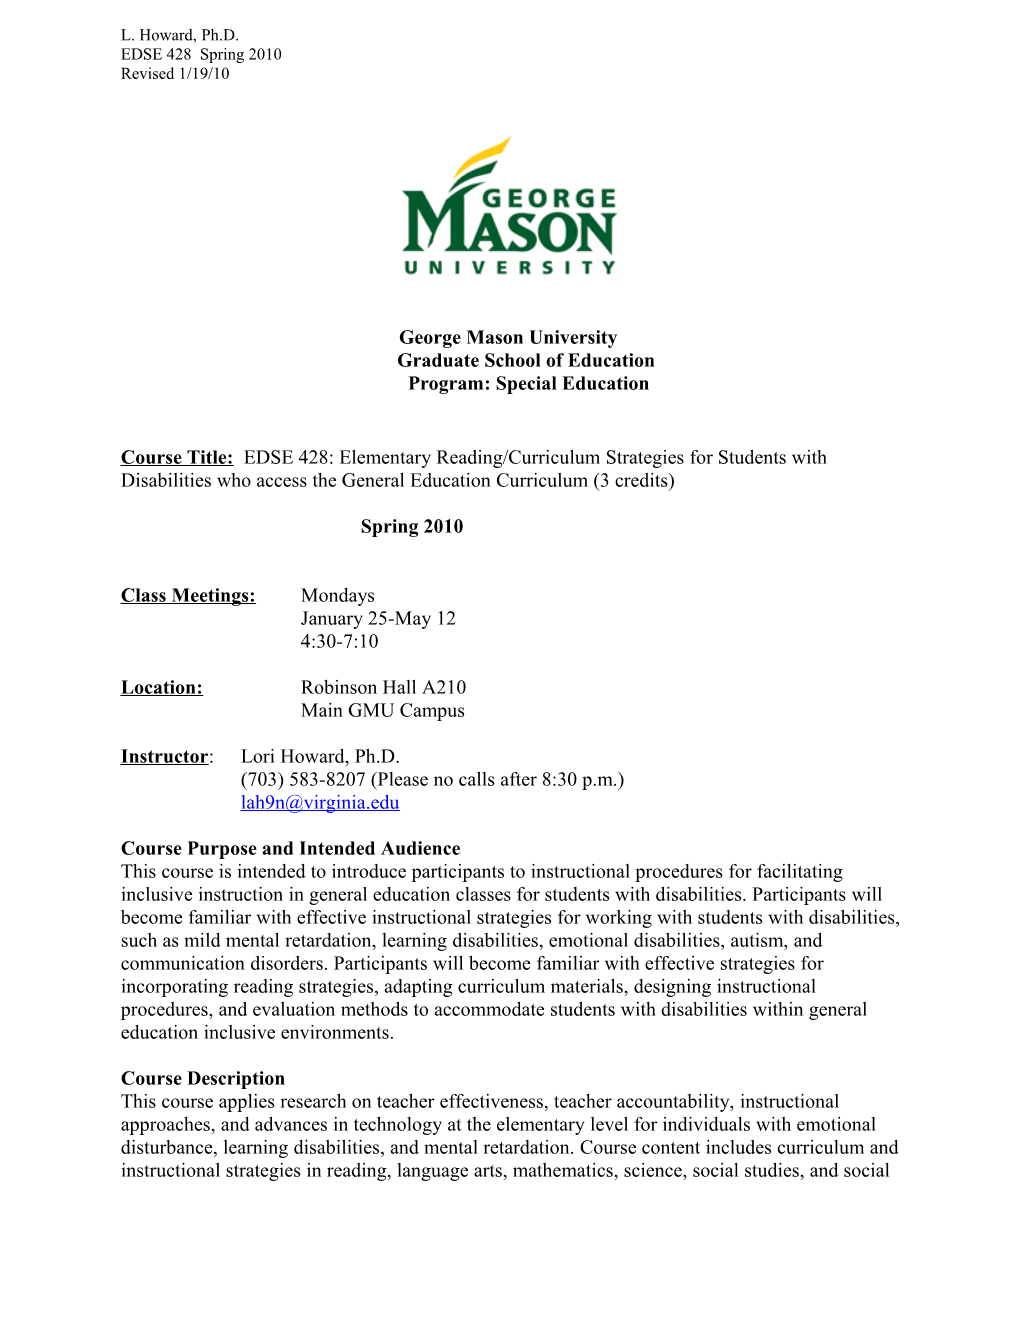 George Mason University Graduate School of Education Program: Special Education